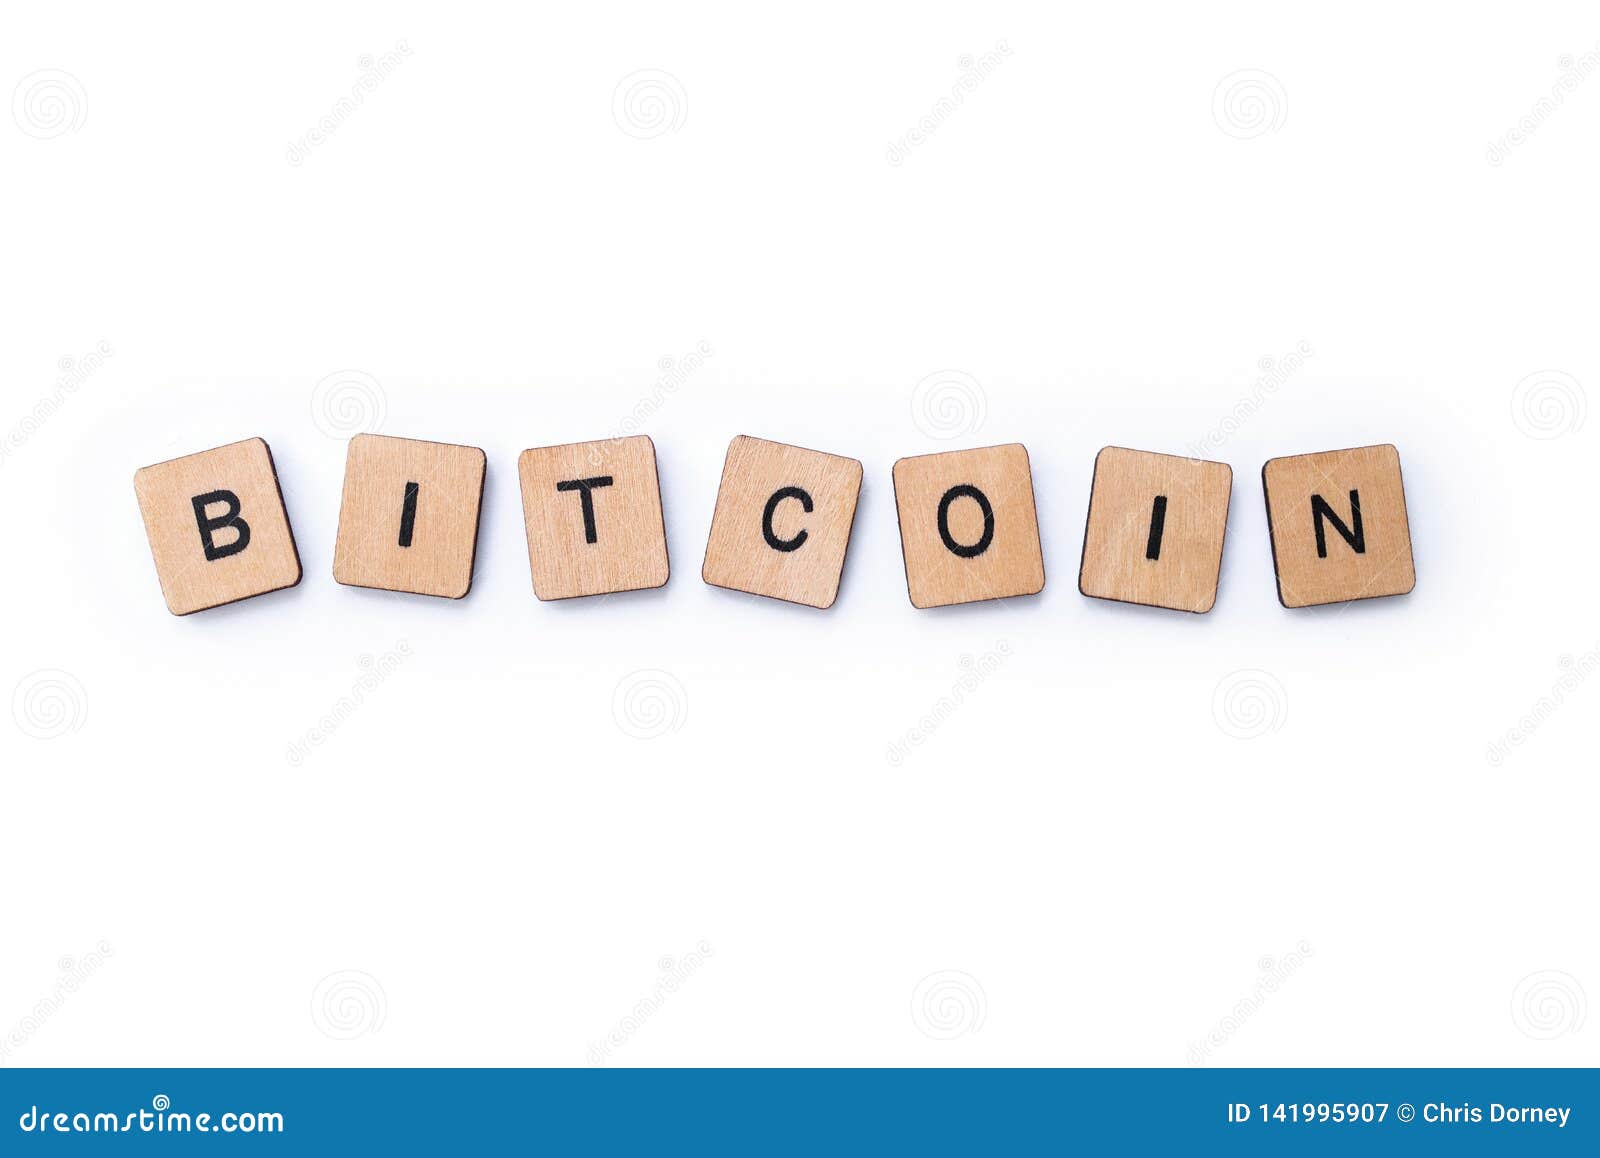 bitcoin word